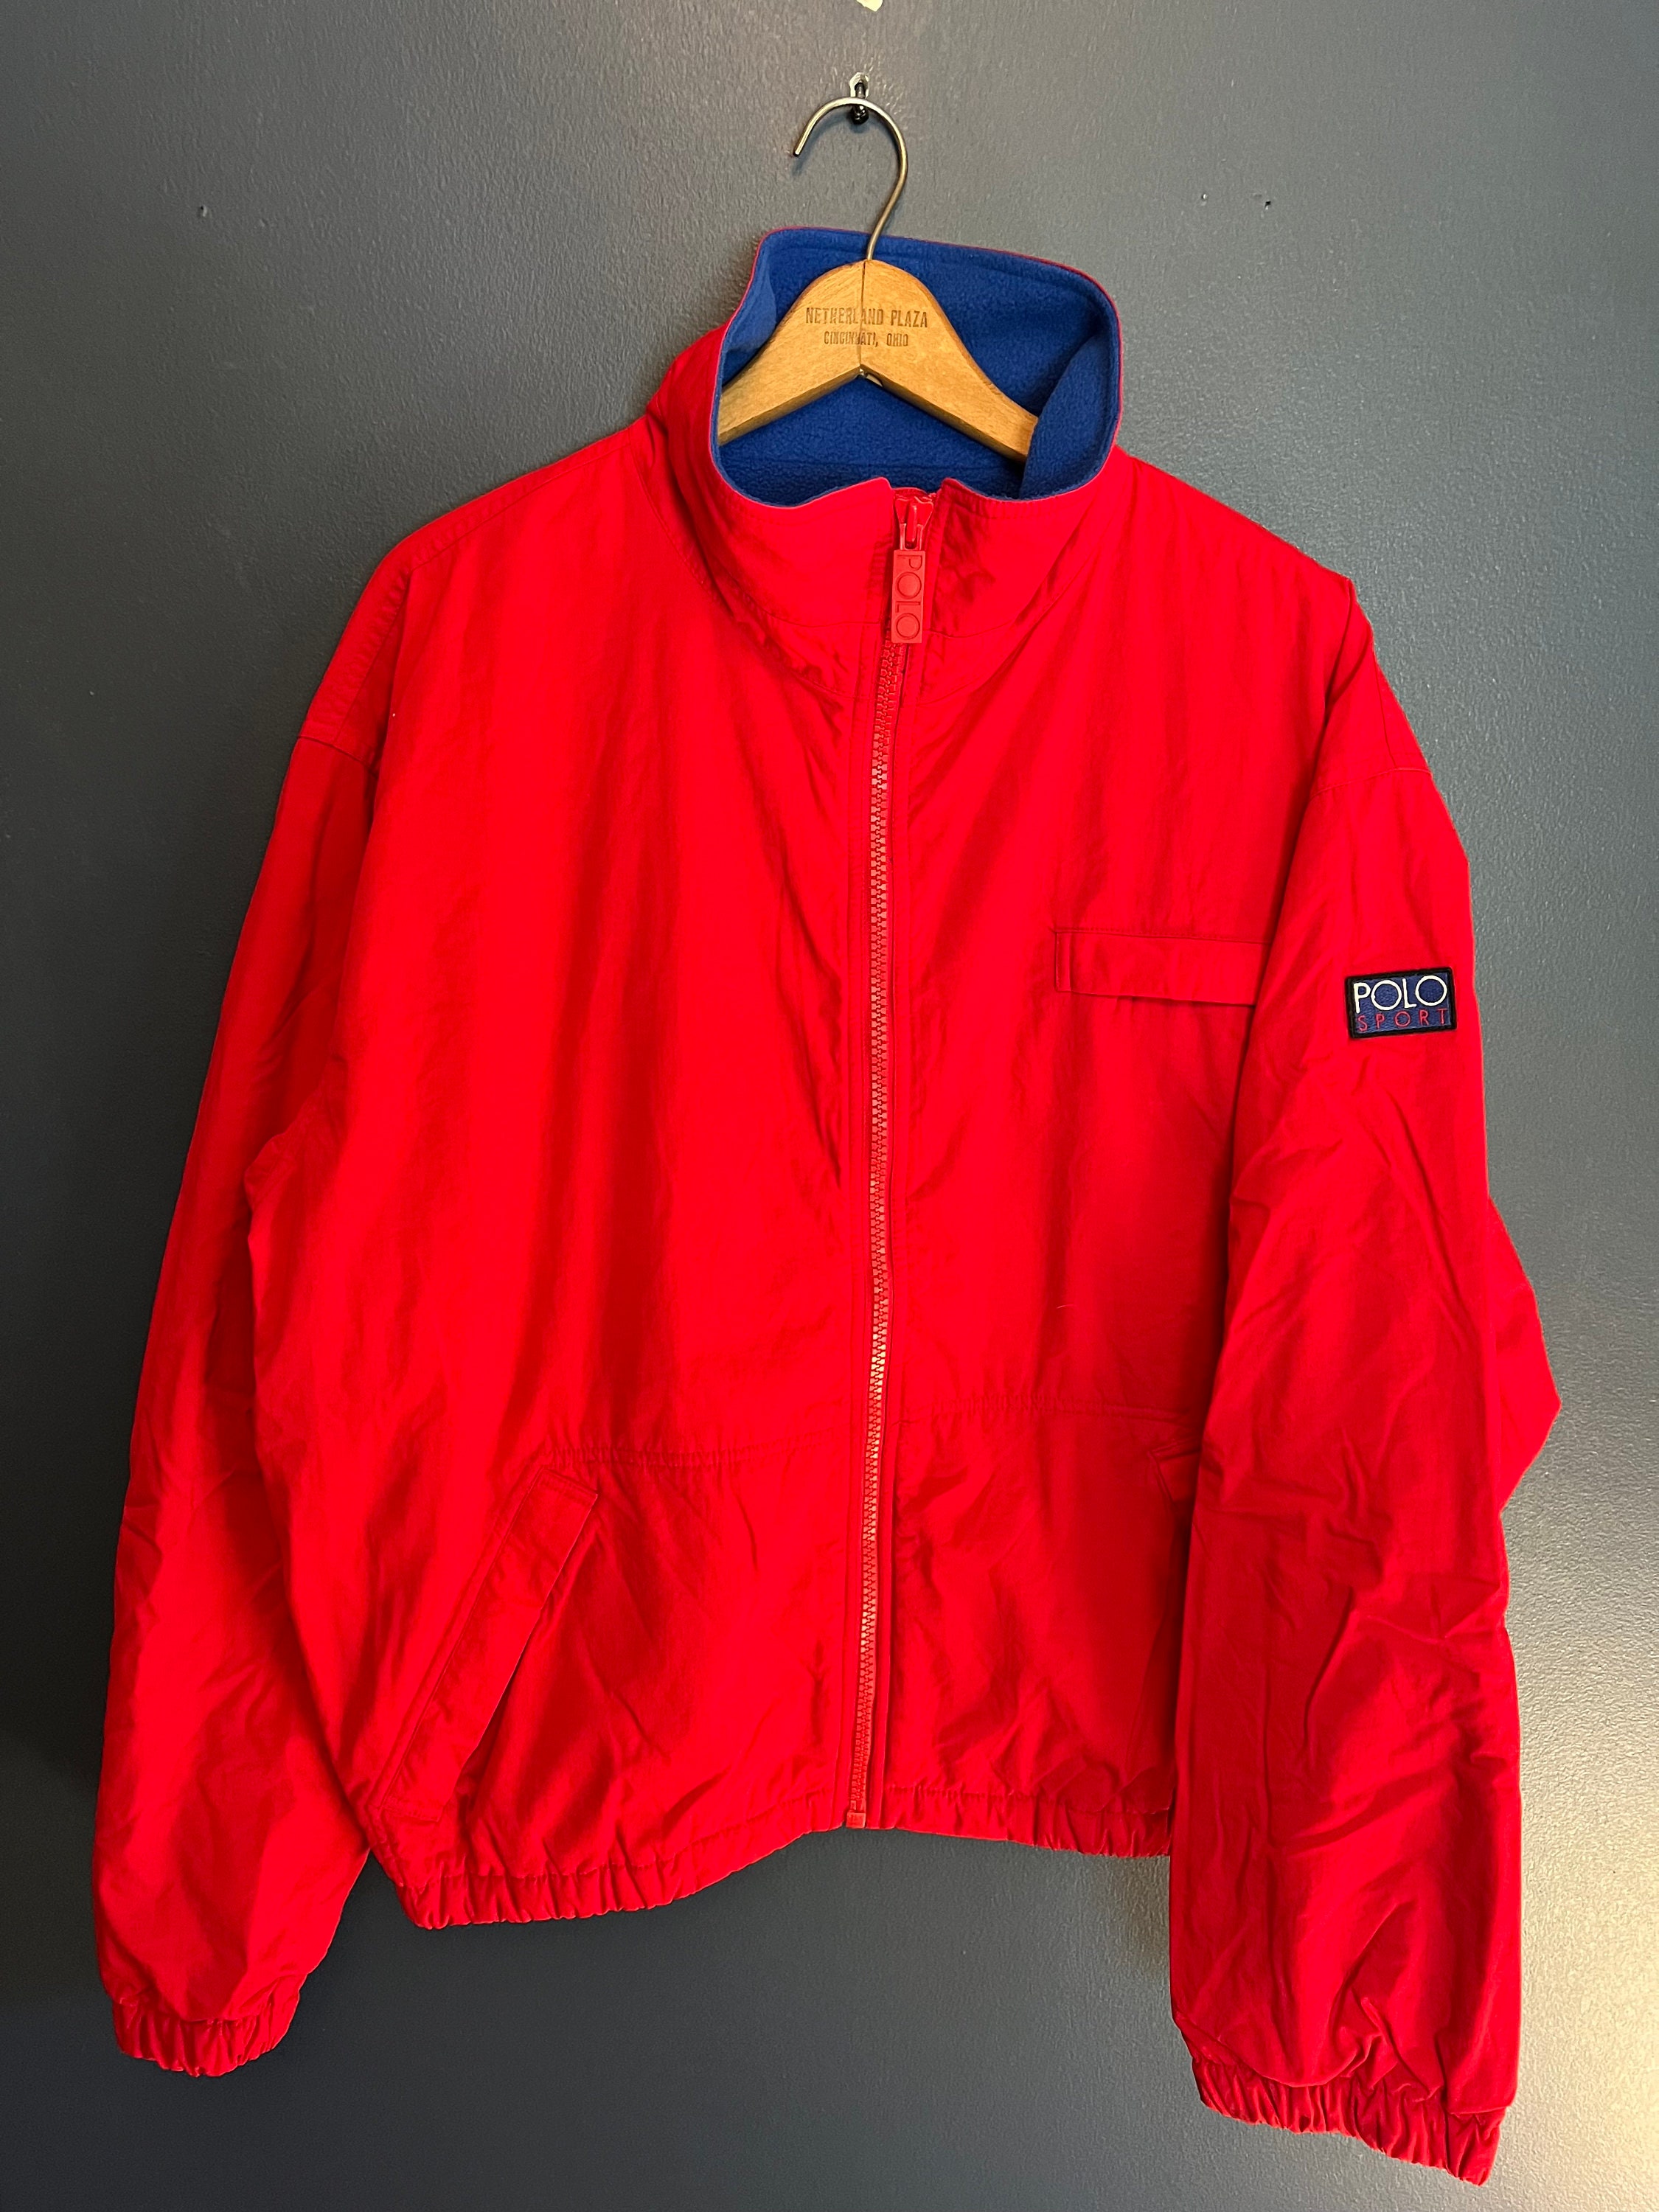 Vintage 90s Polo Ralph Lauren Polo Sport Jacket Size Large - Etsy